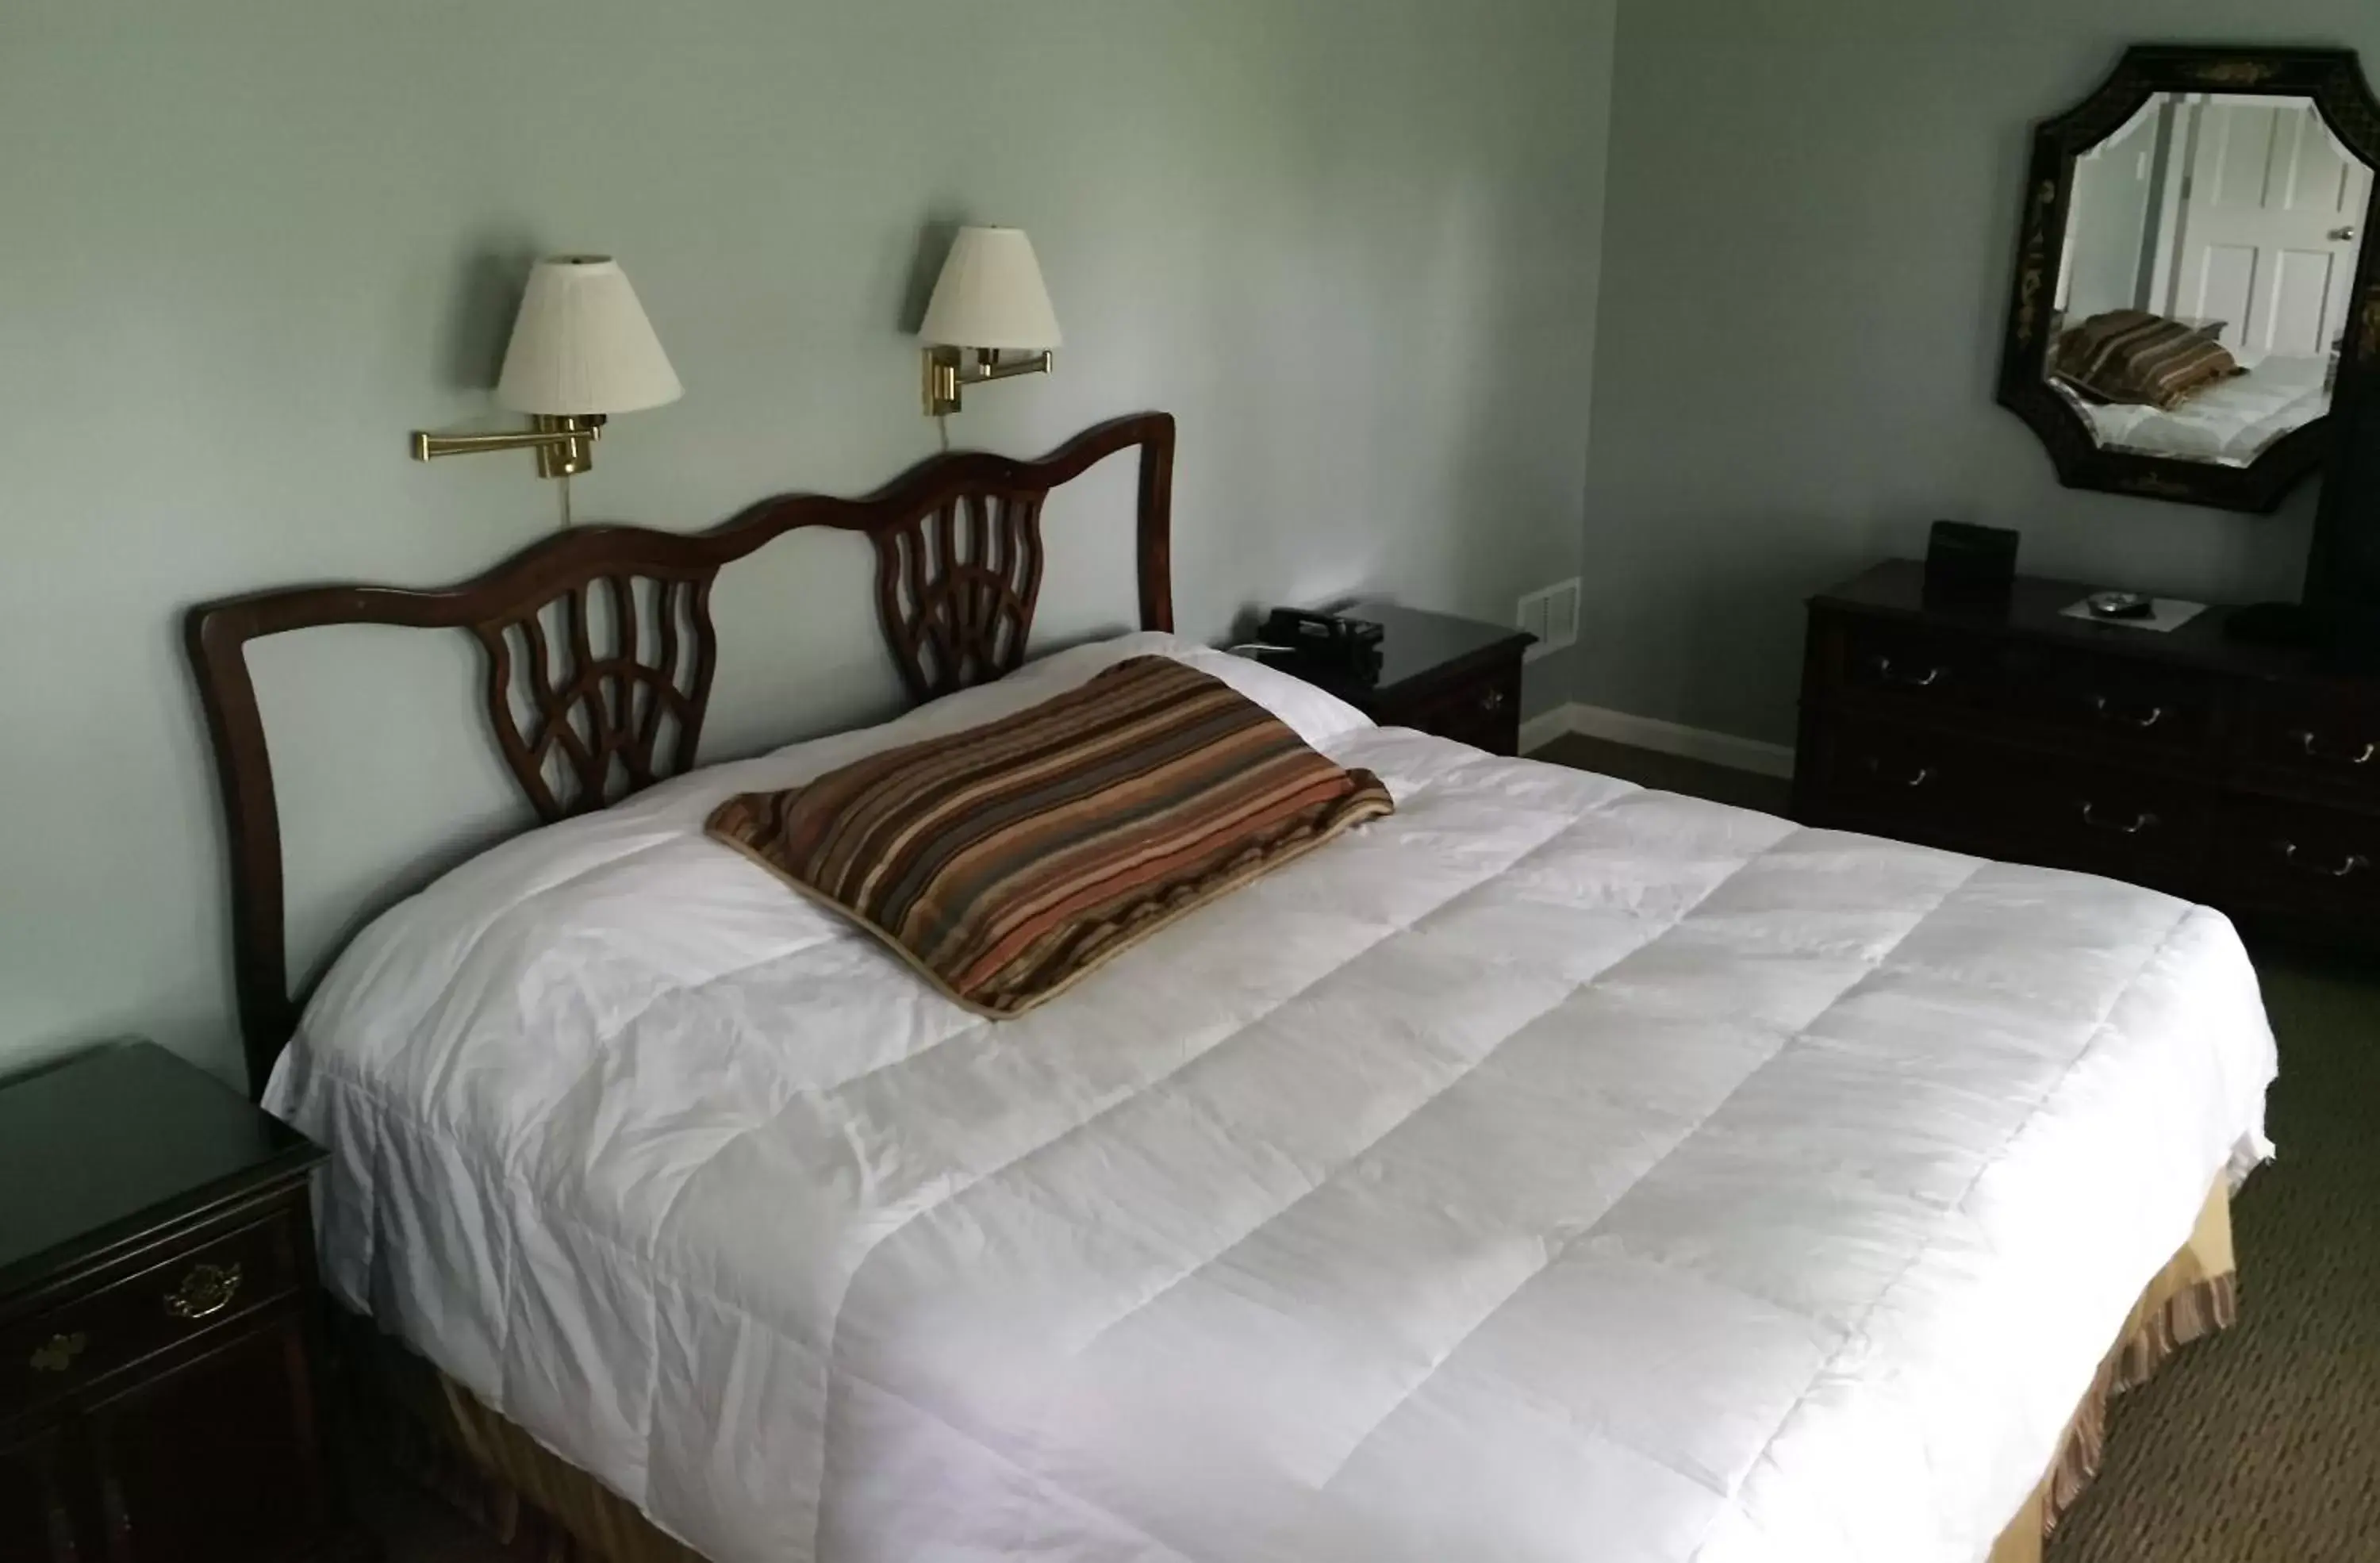 Bed, Room Photo in Century Suites Hotel